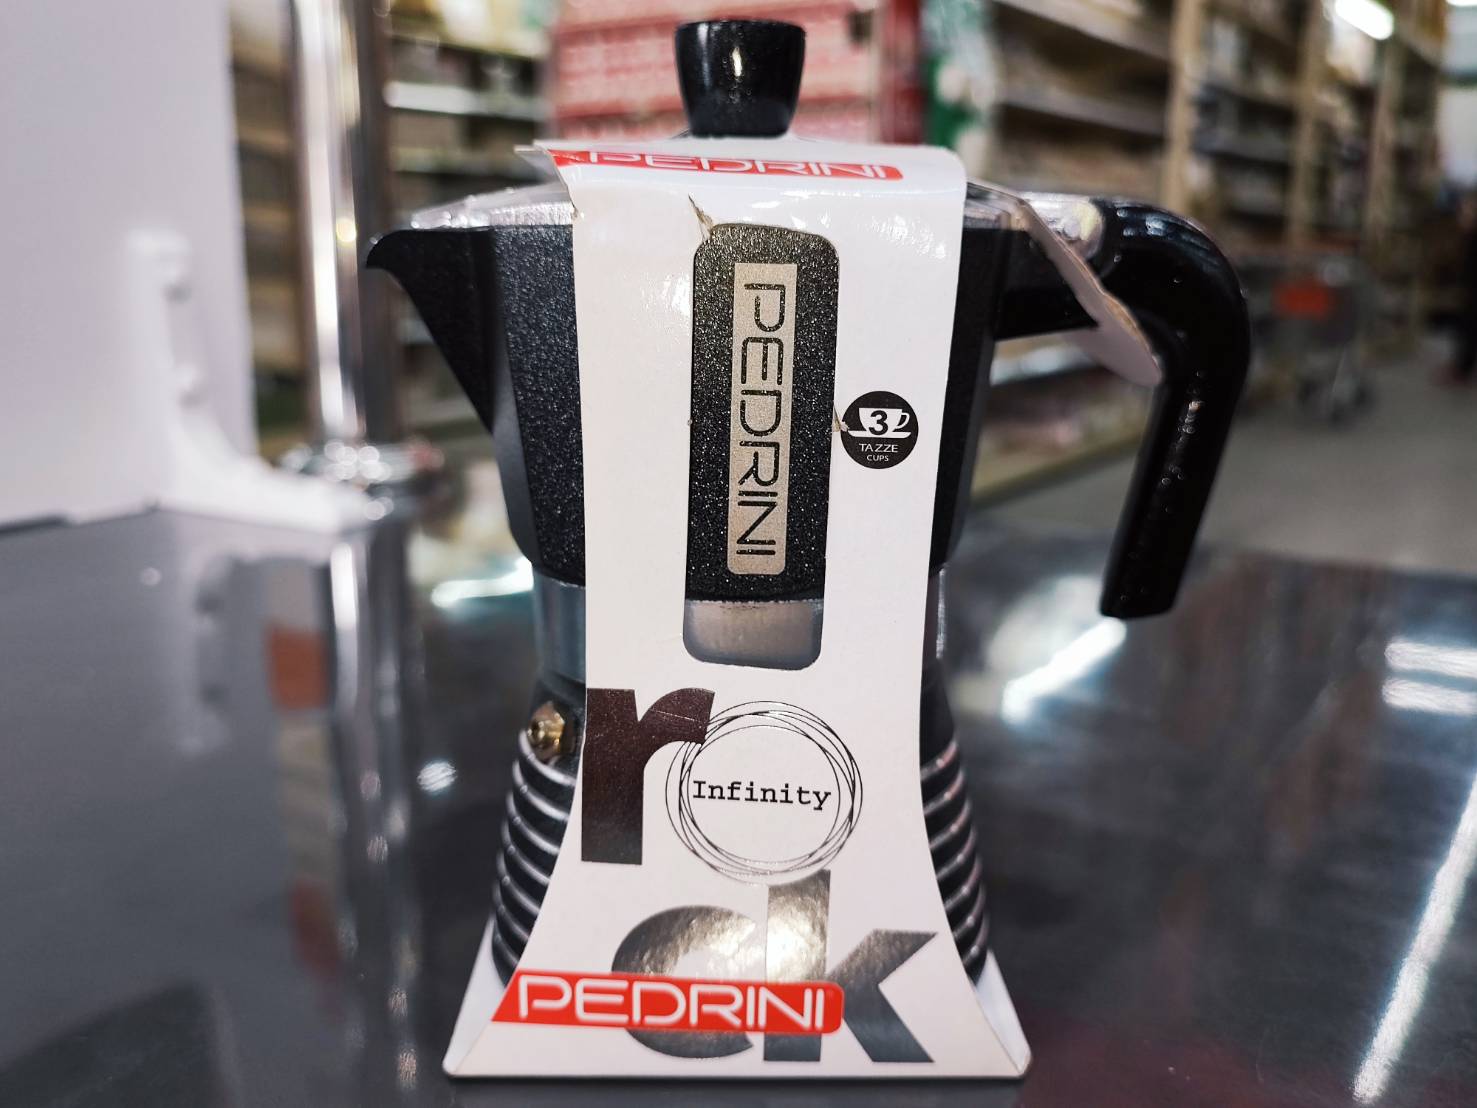 Infinity coffee maker - Pedrini